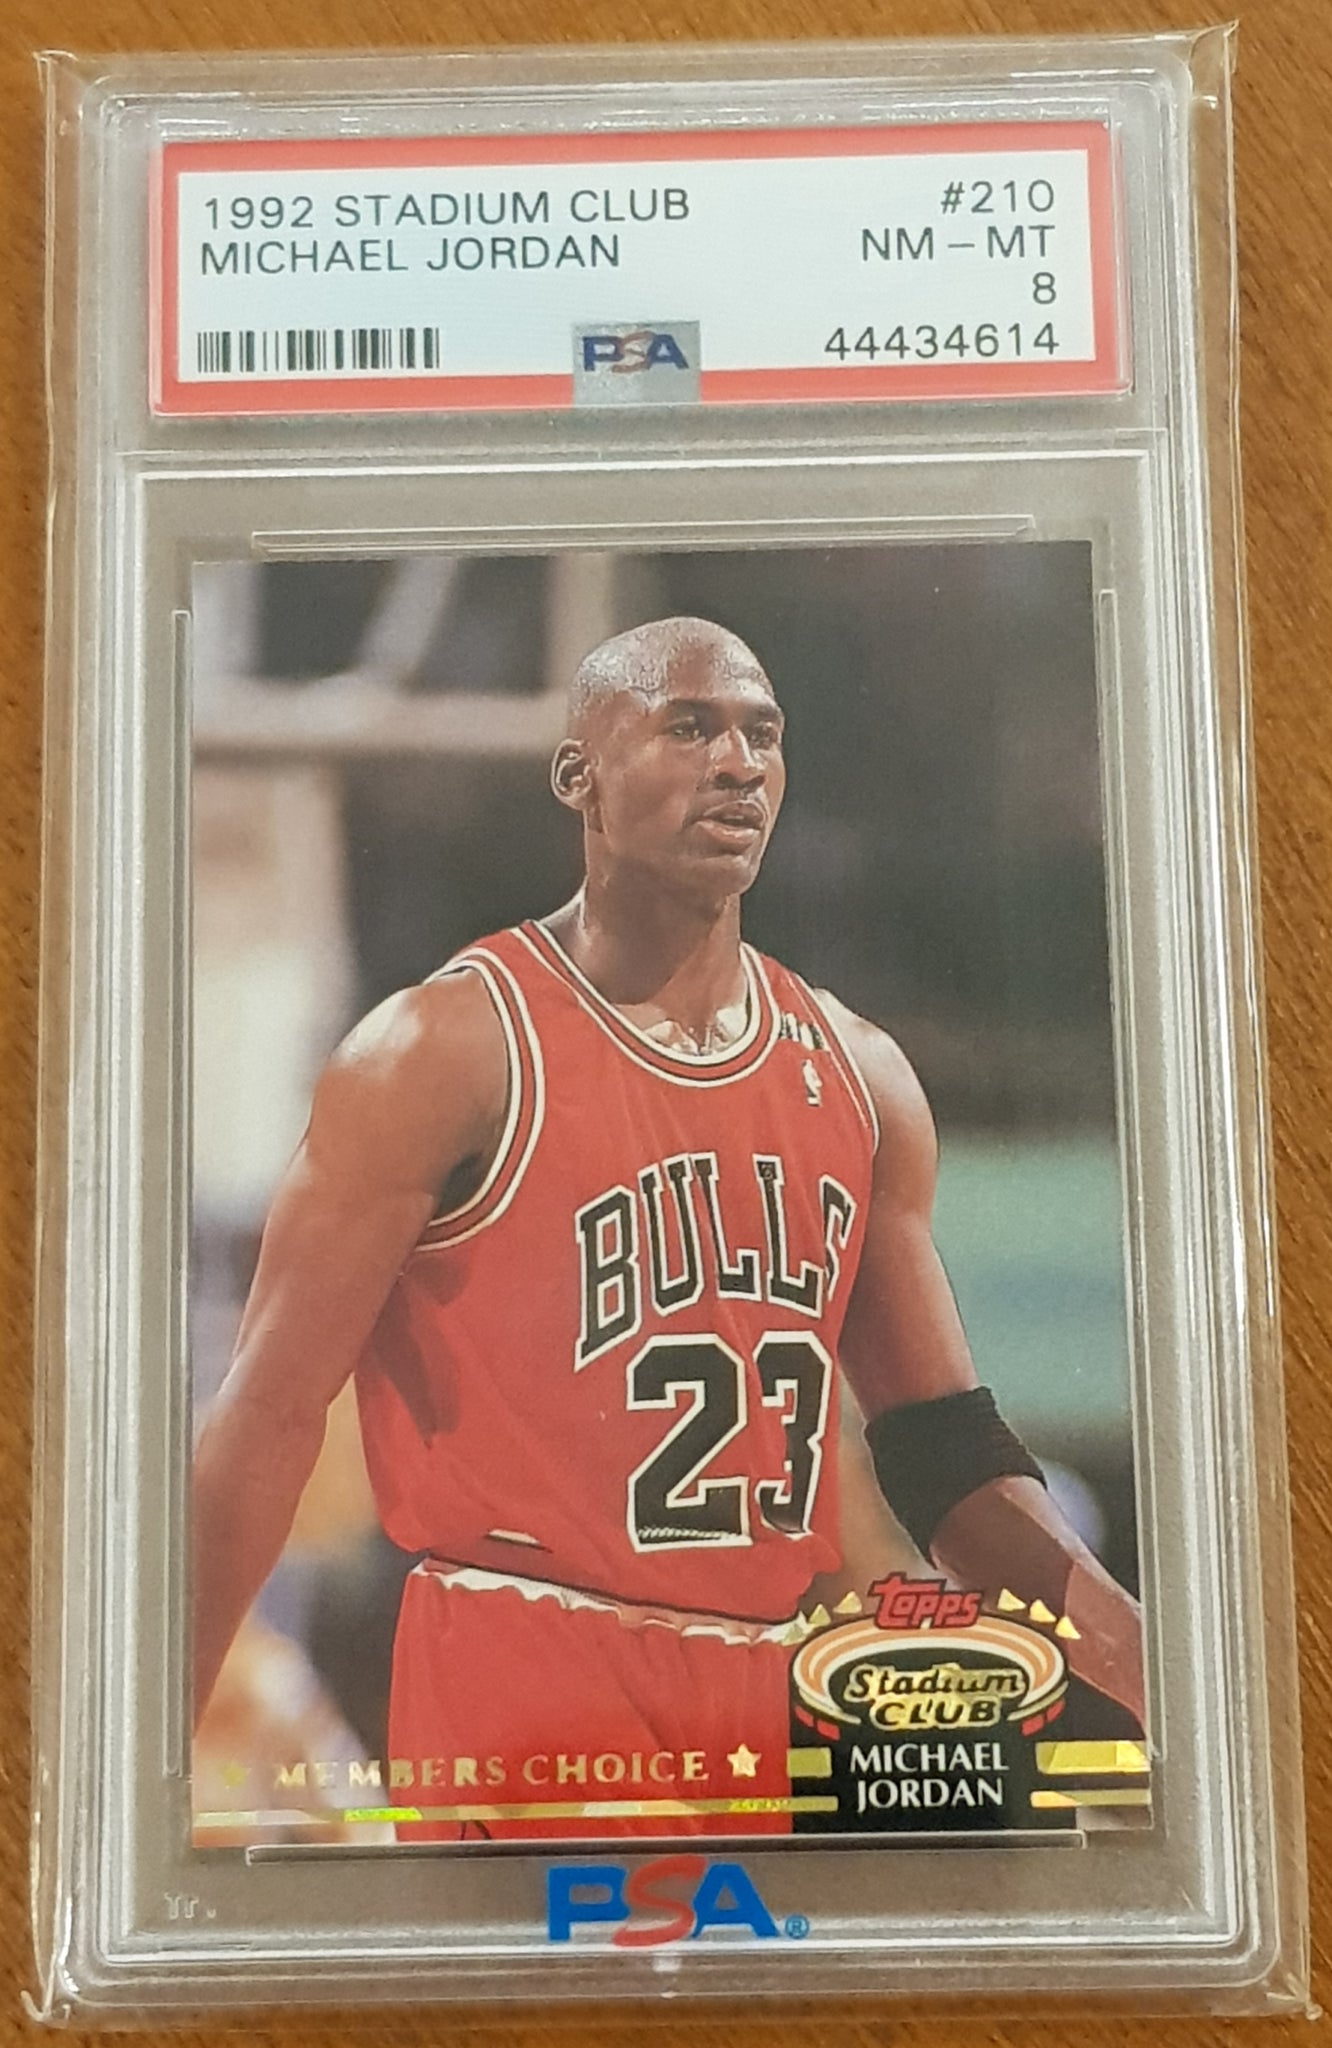 1992 Topps Stadium Club Michael Jordan #210 PSA 8 Trading Card